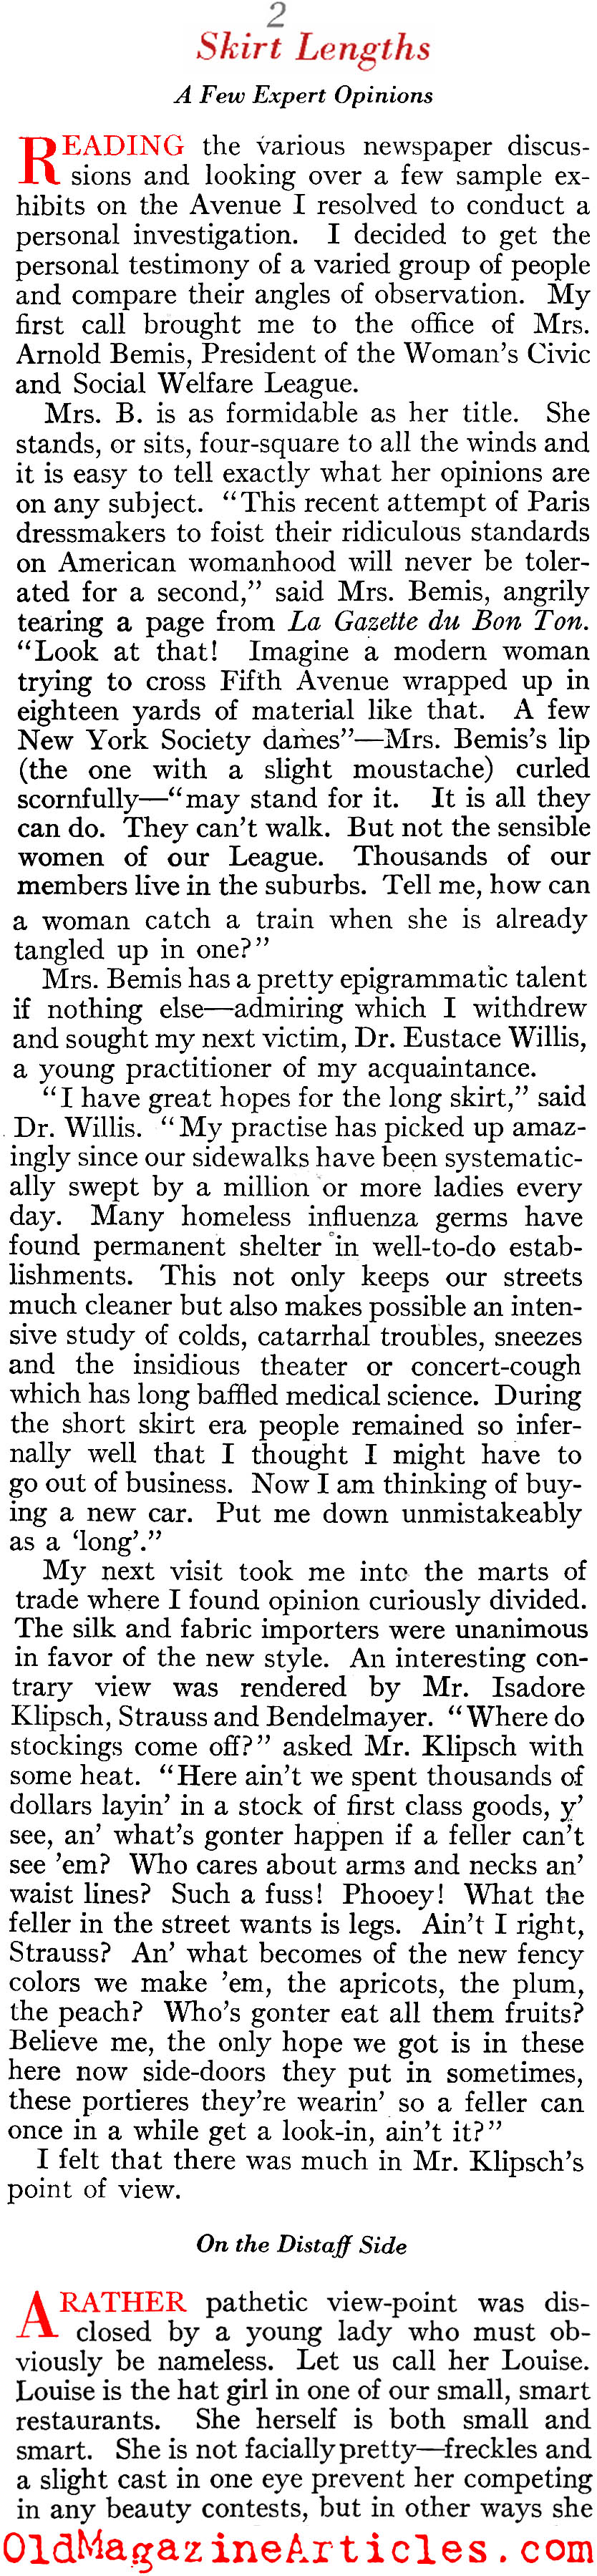 Skirt Length: High or Low? (Vanity Fair Magazine, 1923)